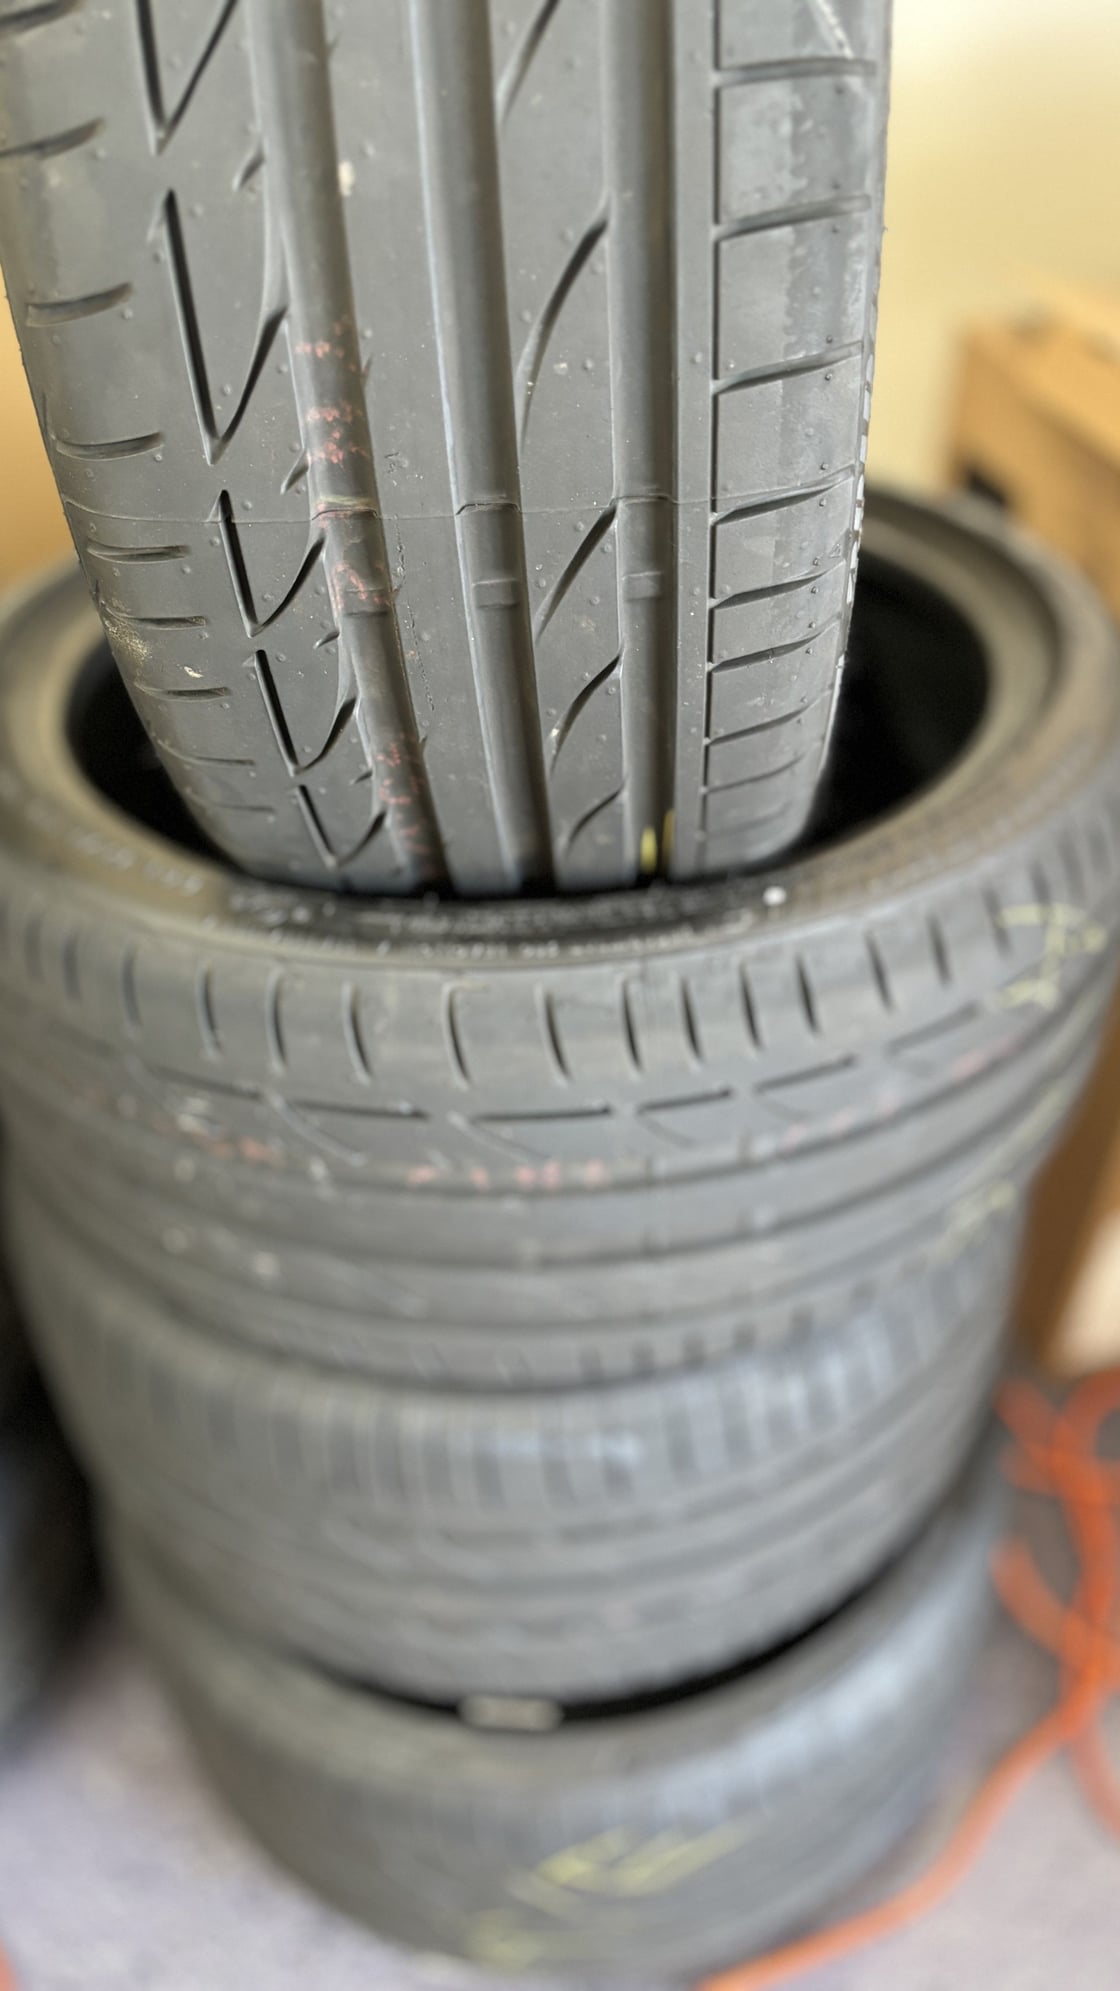 Wheels and Tires/Axles - Full set of Bridgestone Potenza 255/35R19, 285/30R19 S001 RFT Tires - New - 2015 to 2020 Mercedes-Benz SL550 - Jensen Beach, FL 34957, United States